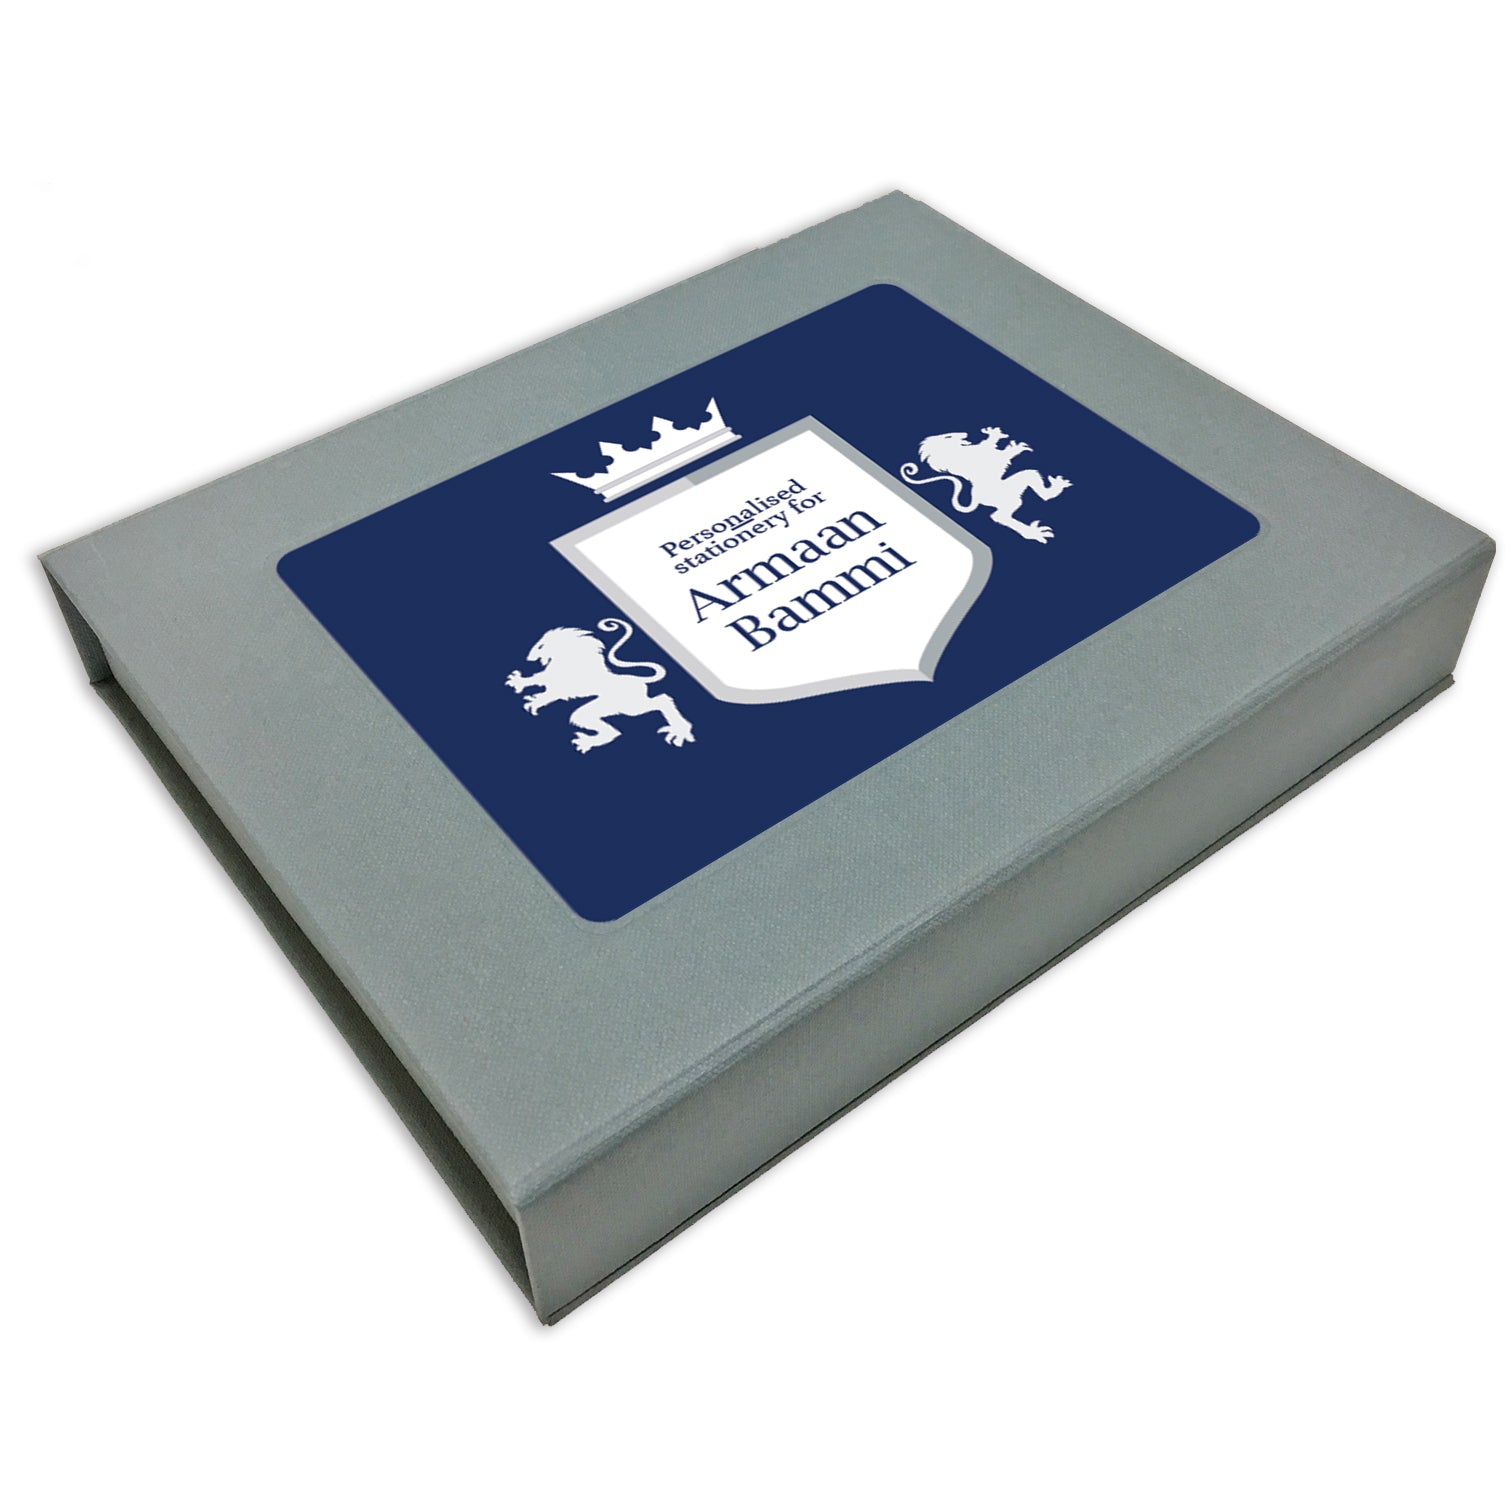 Personalized Stationery Gift Set - Monogram Crest, Set of 24 or 48